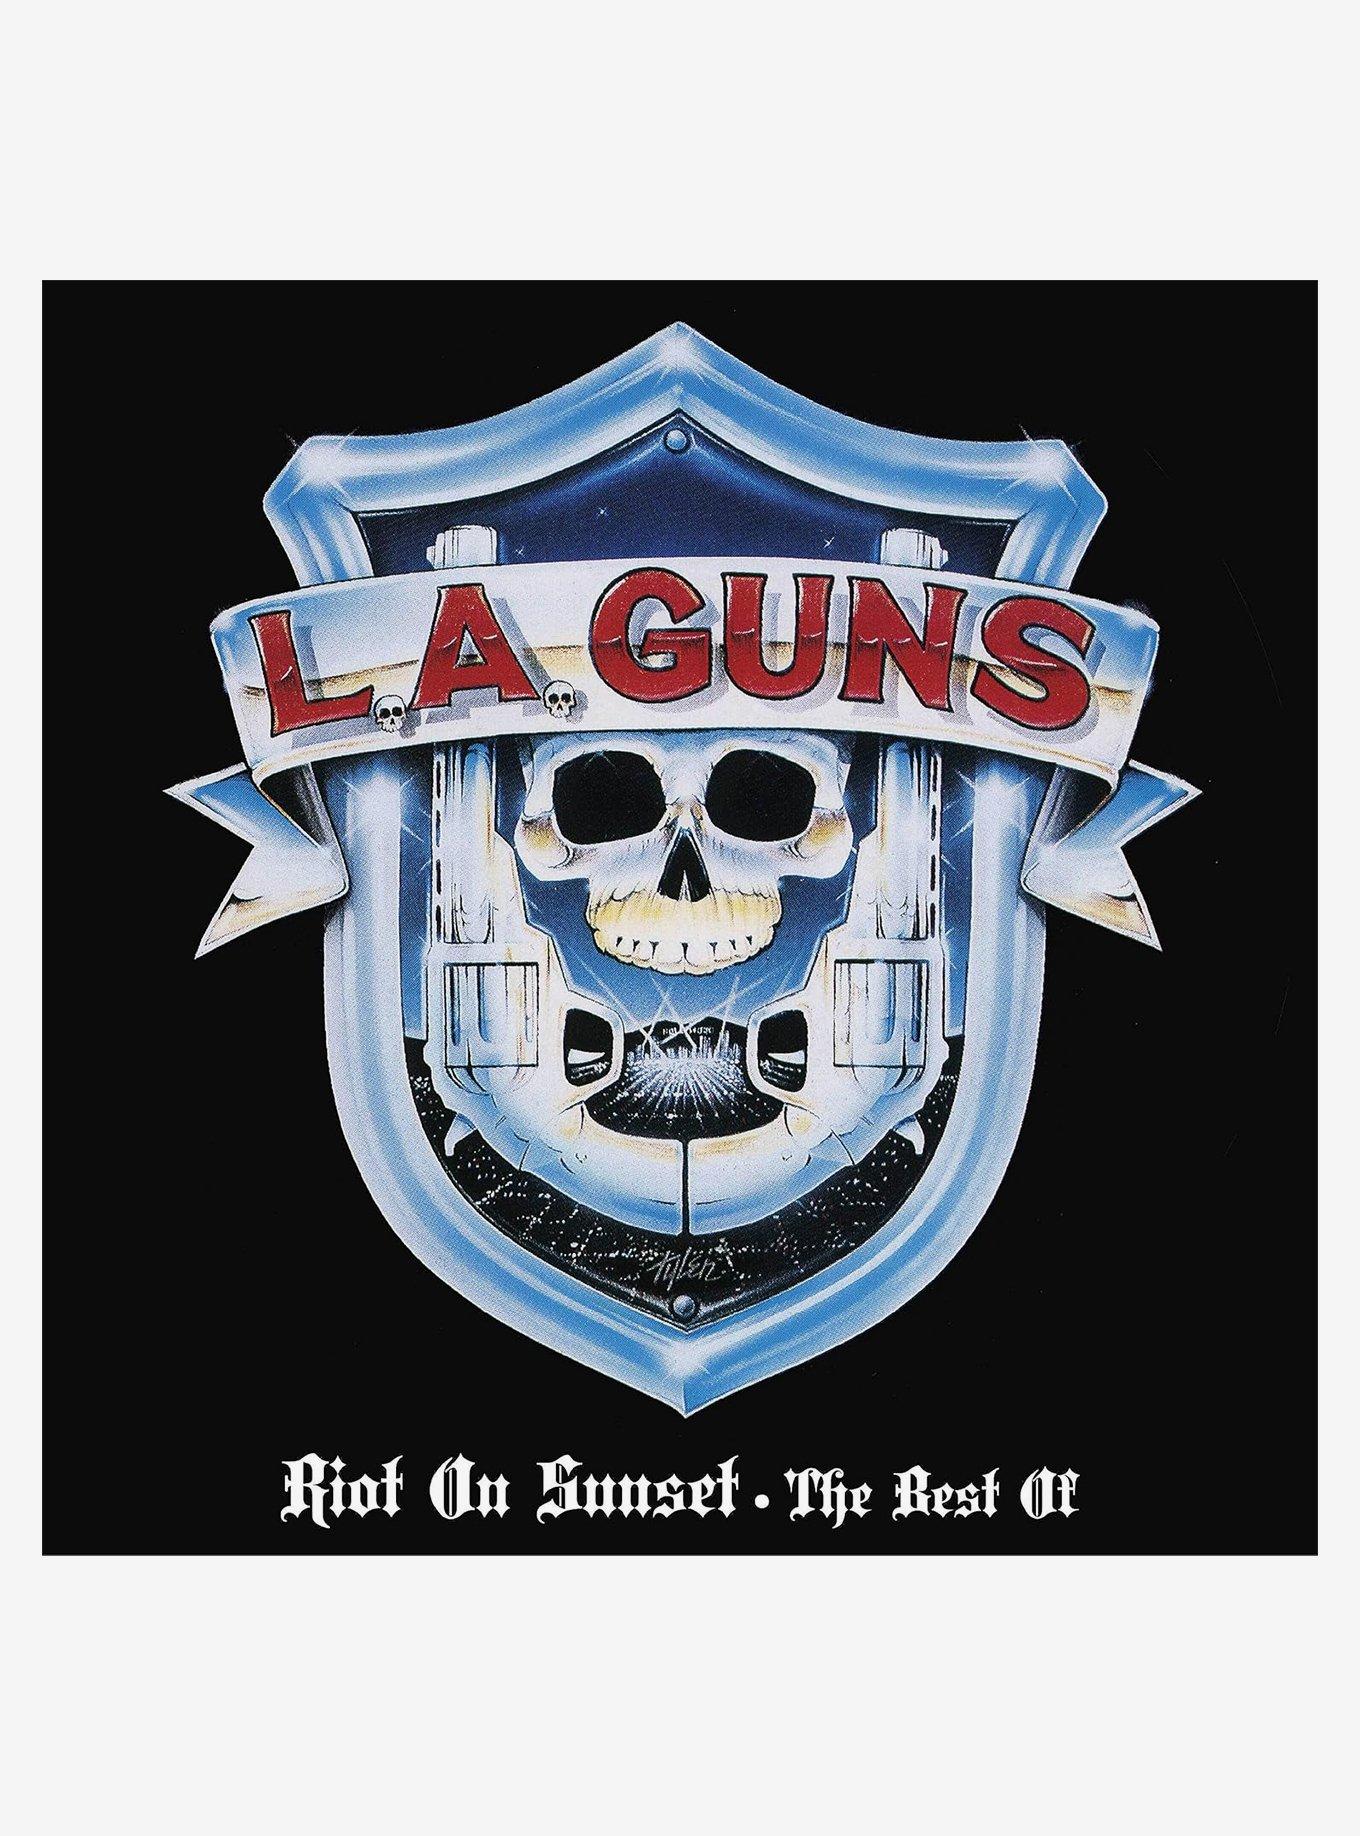 L.A. Guns Riot On Sunset The Best Of Vinyl LP